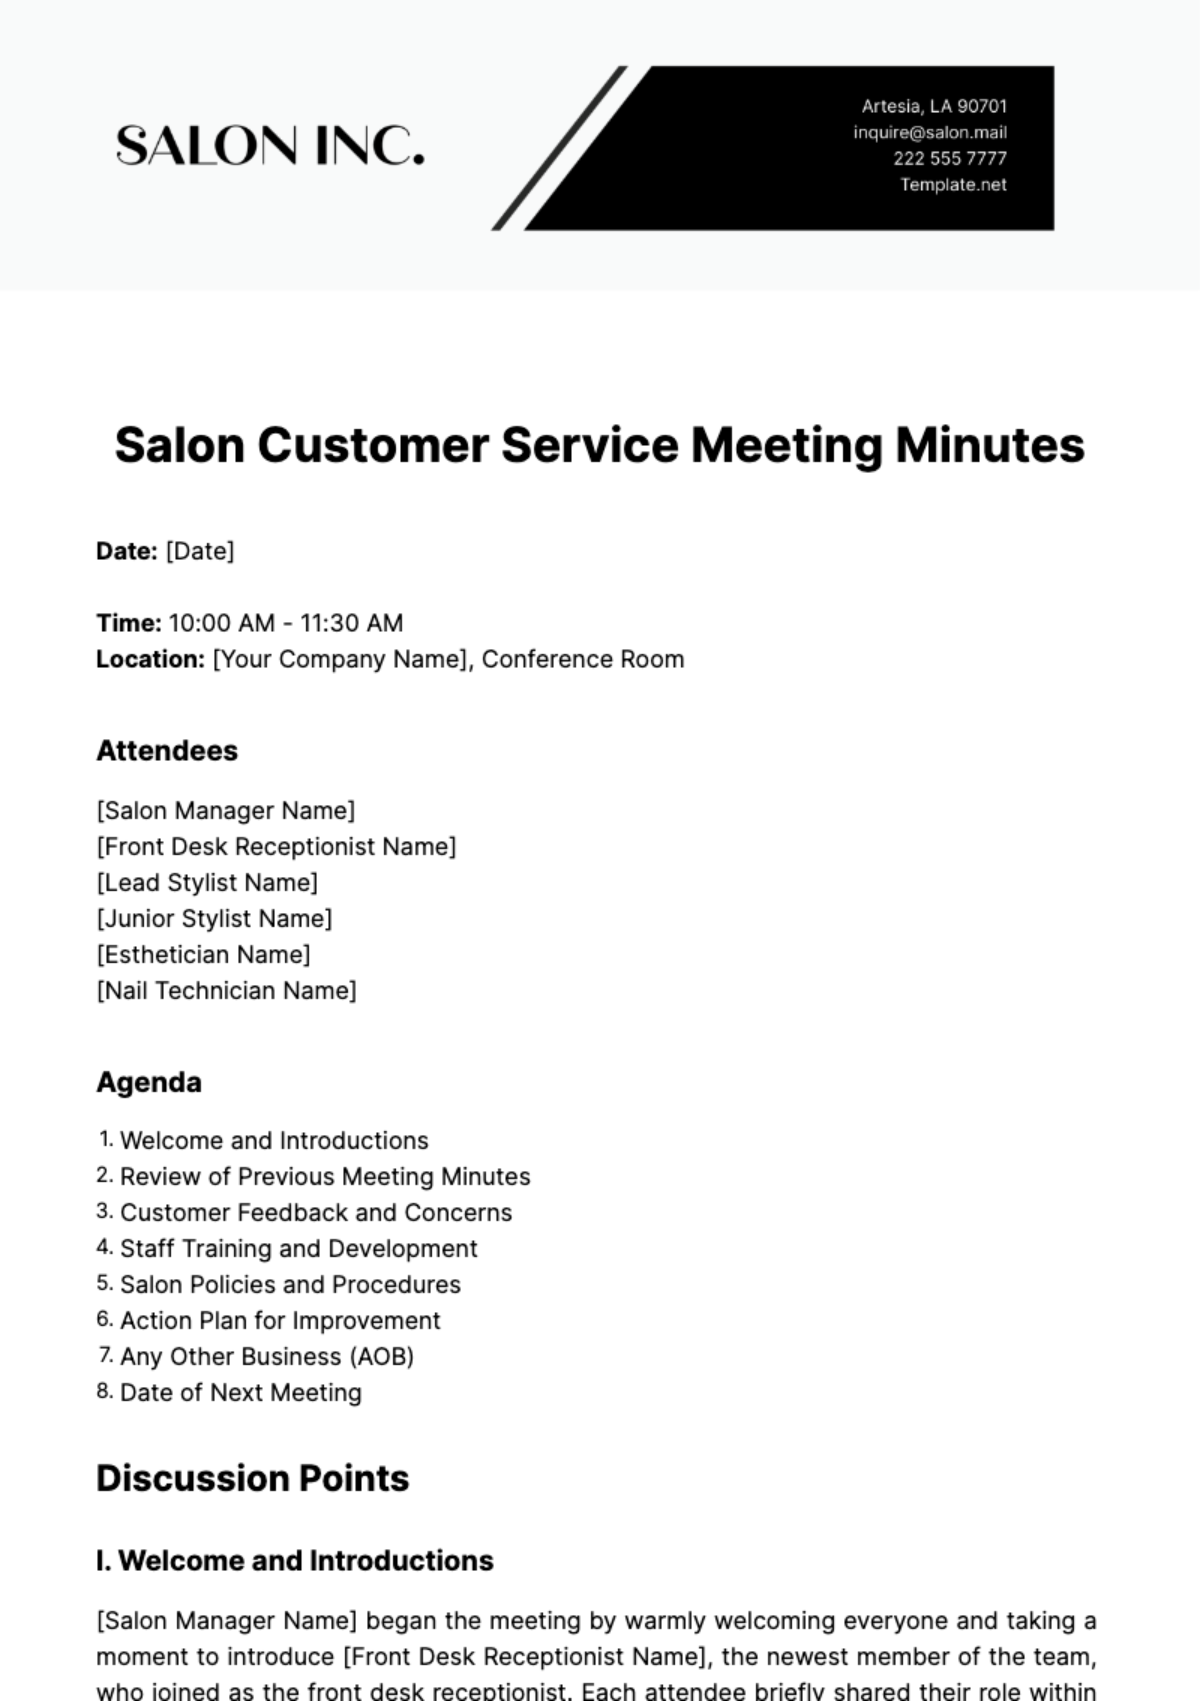 Salon Customer Service Meeting Minute Template